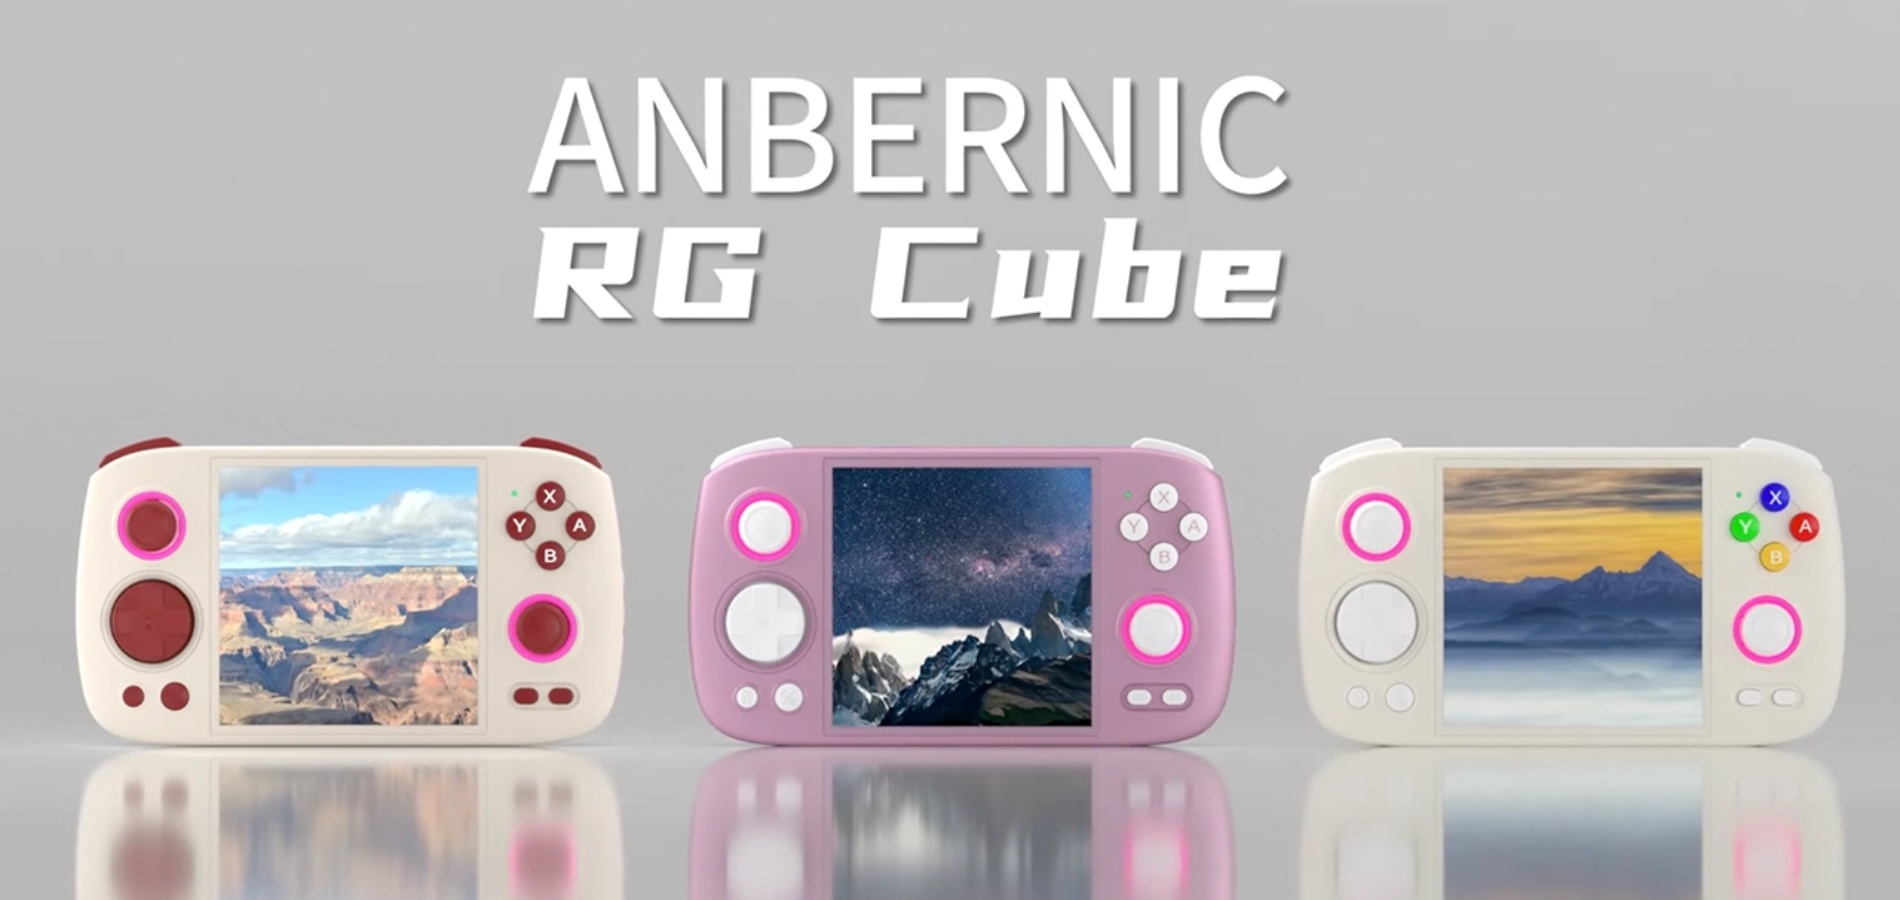 Anbernic представила портативную консоль RG Cube для ретрогейминга